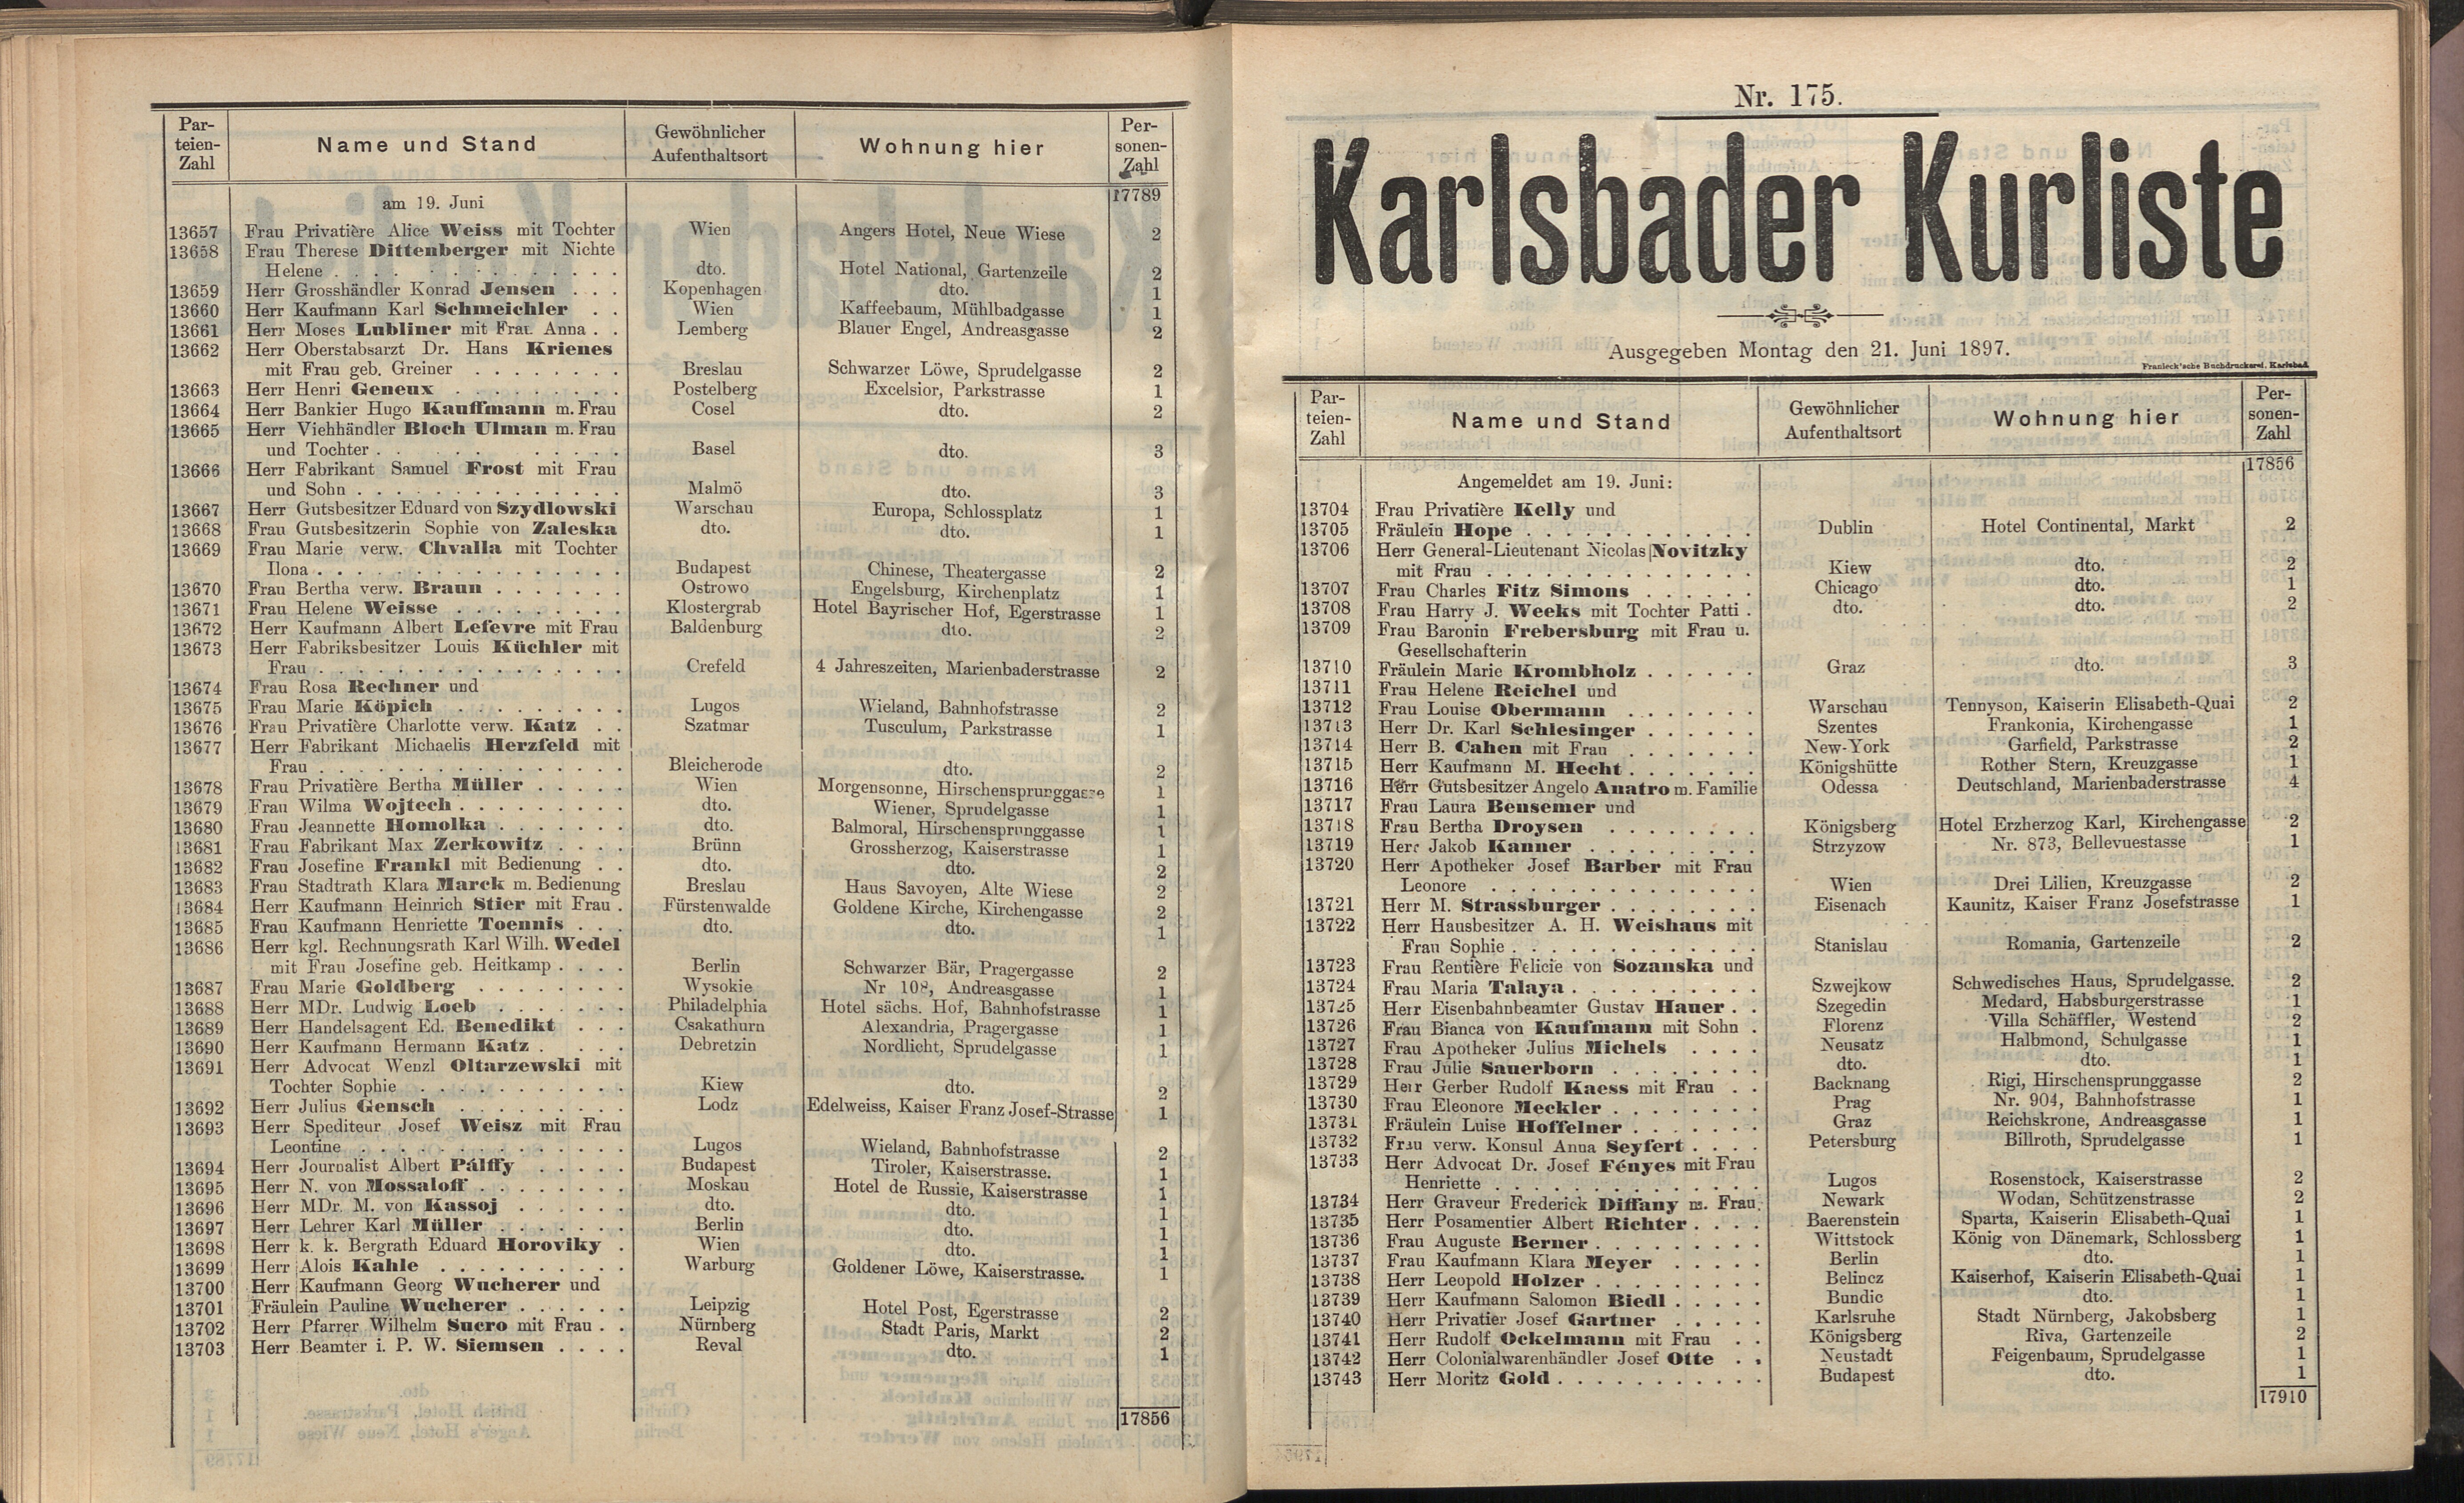 191. soap-kv_knihovna_karlsbader-kurliste-1897_1920